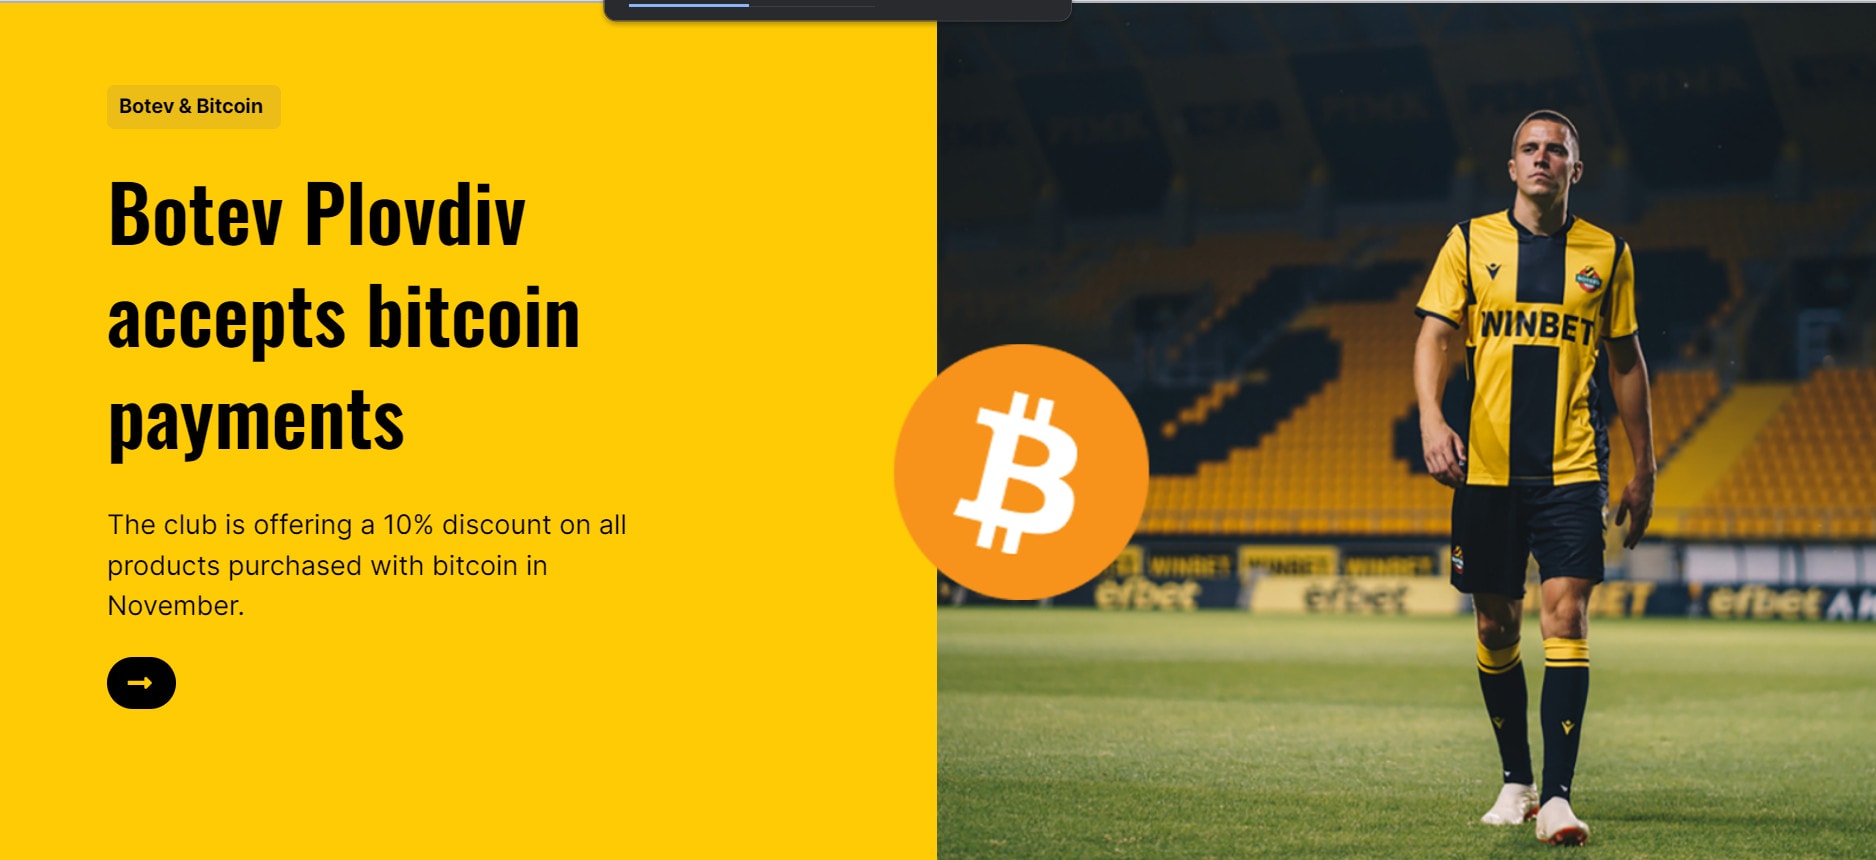 Botev Plovdiv, Bulgarian football club, accepts bitcoin payments 